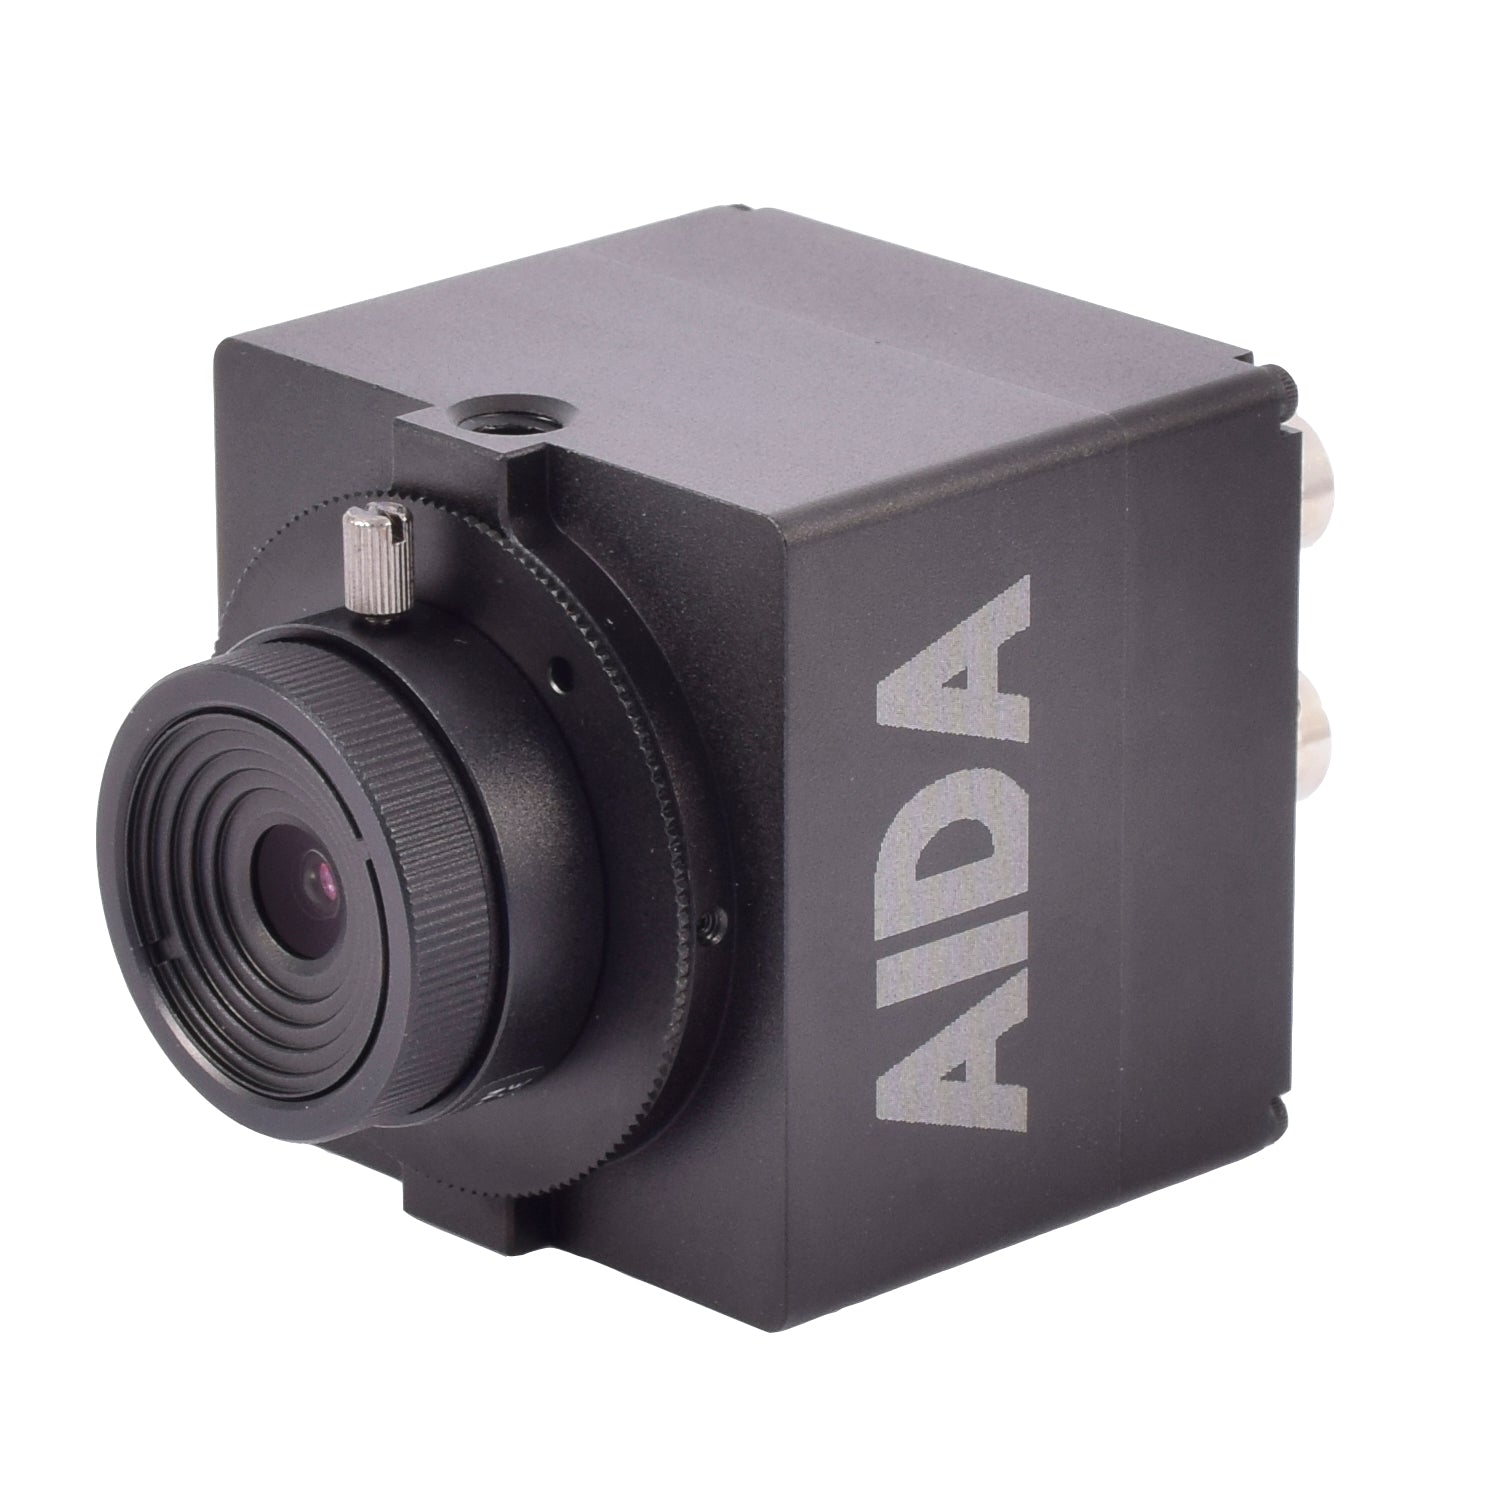 AIDA Imaging 3G-SDI/HDMI Full HD Genlock Camera in a Front-Side View